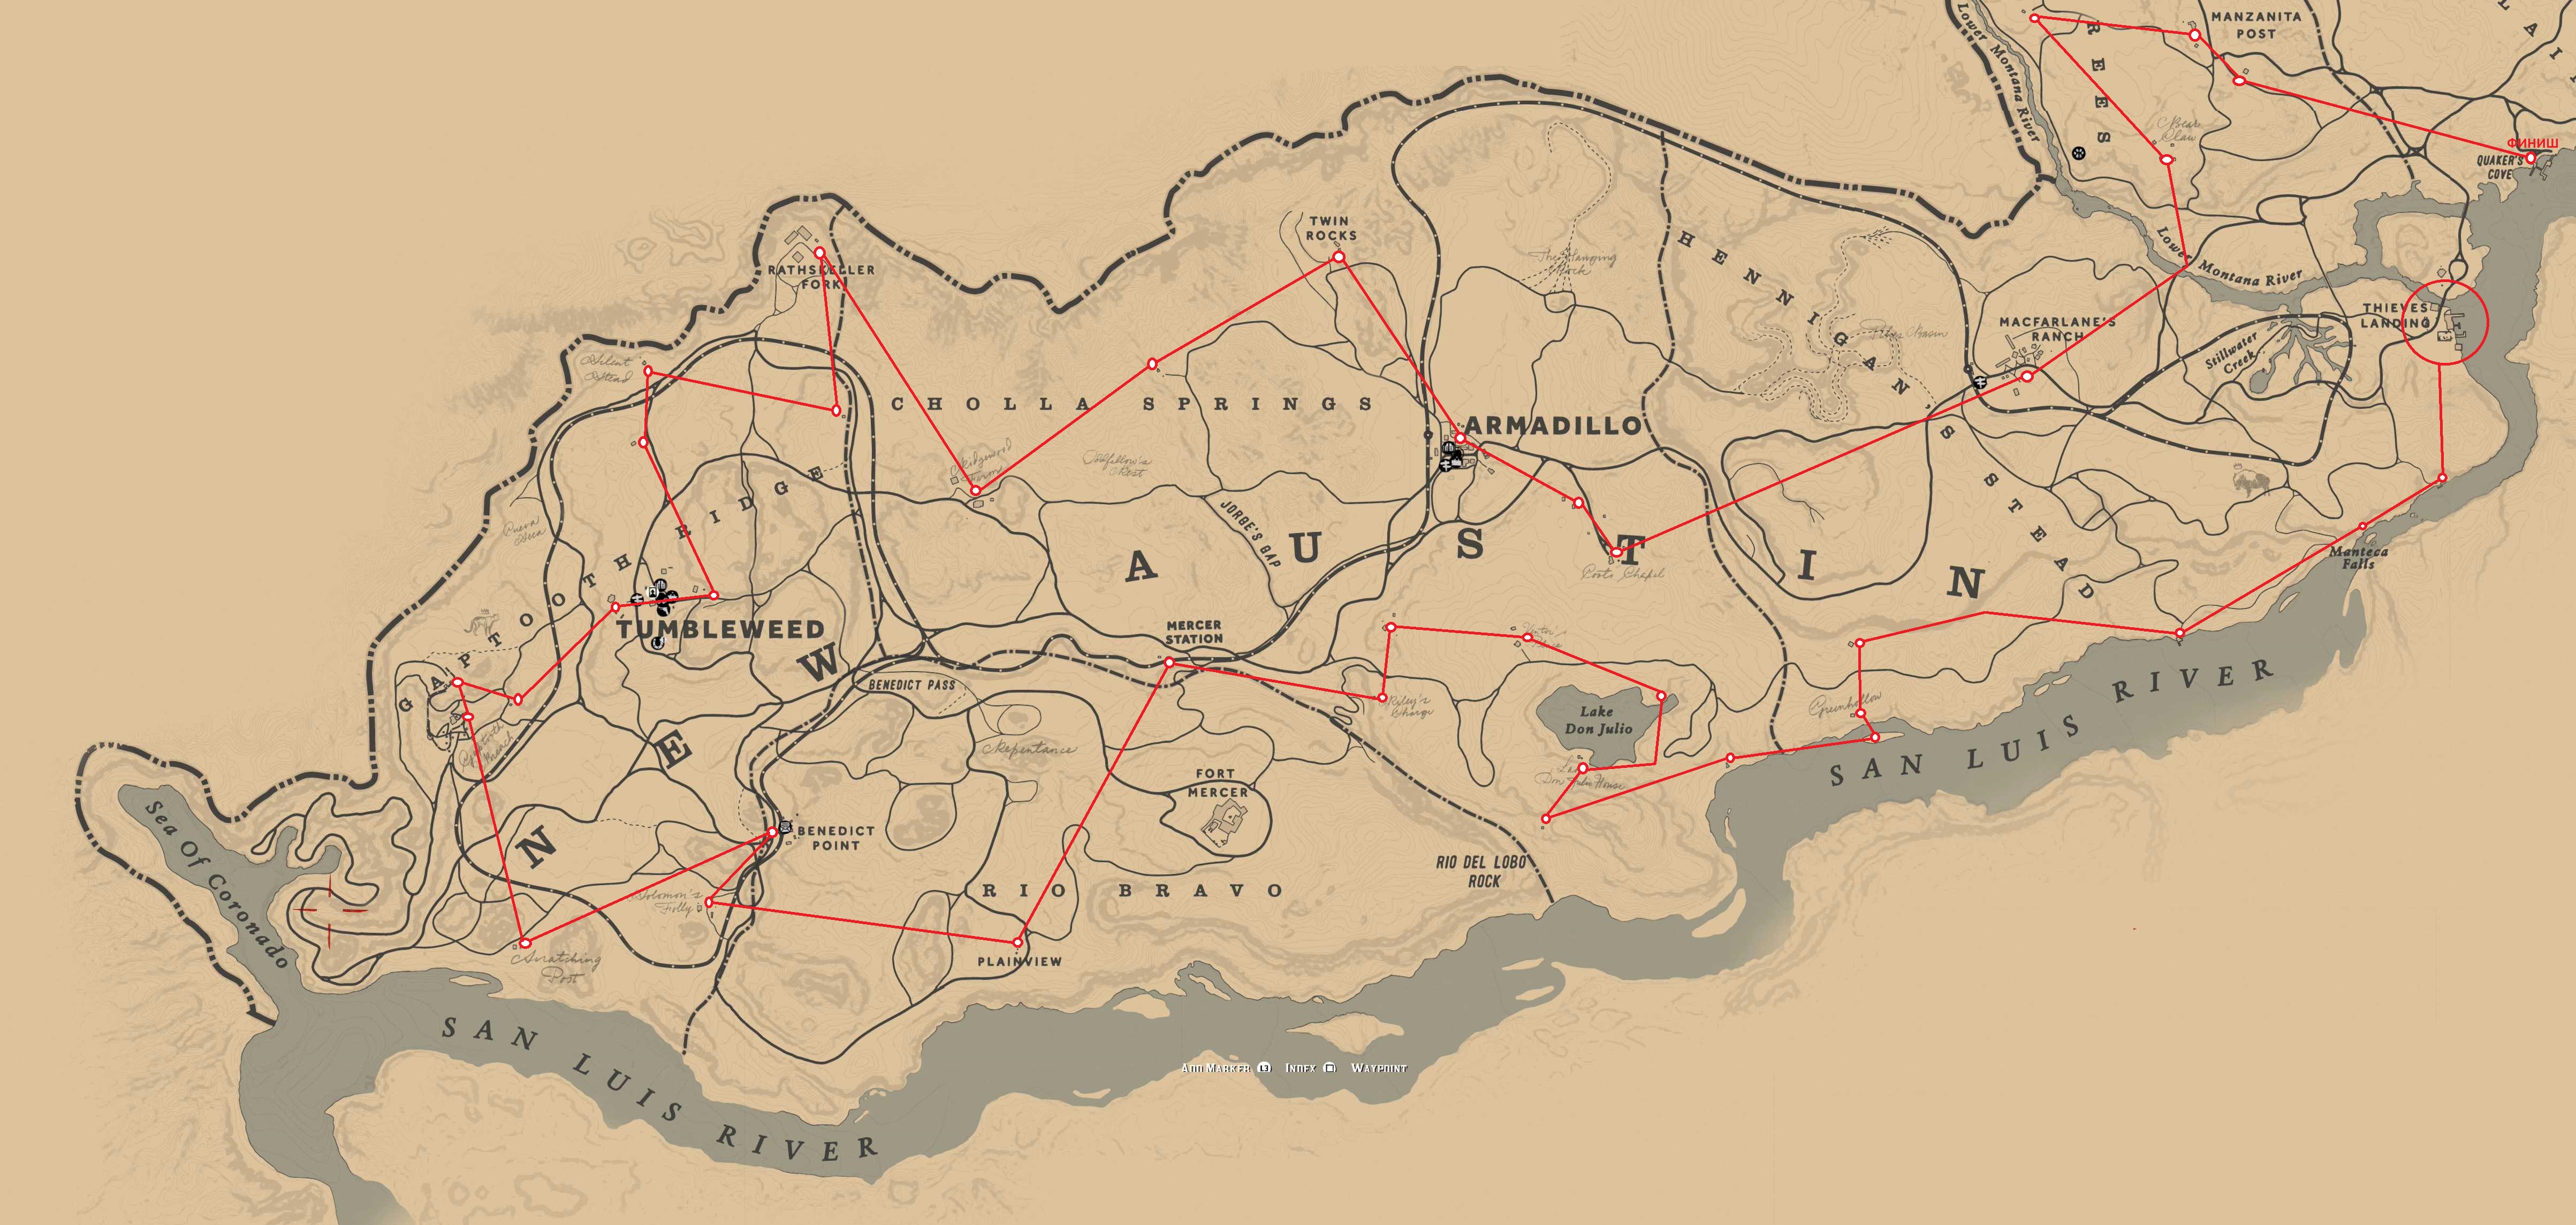 Rdr2 dll библиотеки. Нью Остин rdr 2. Rdr 2 New Austin Map. Карта Red Dead Redemption 2 New Austin. Нью Остин rdr 2 на карте.